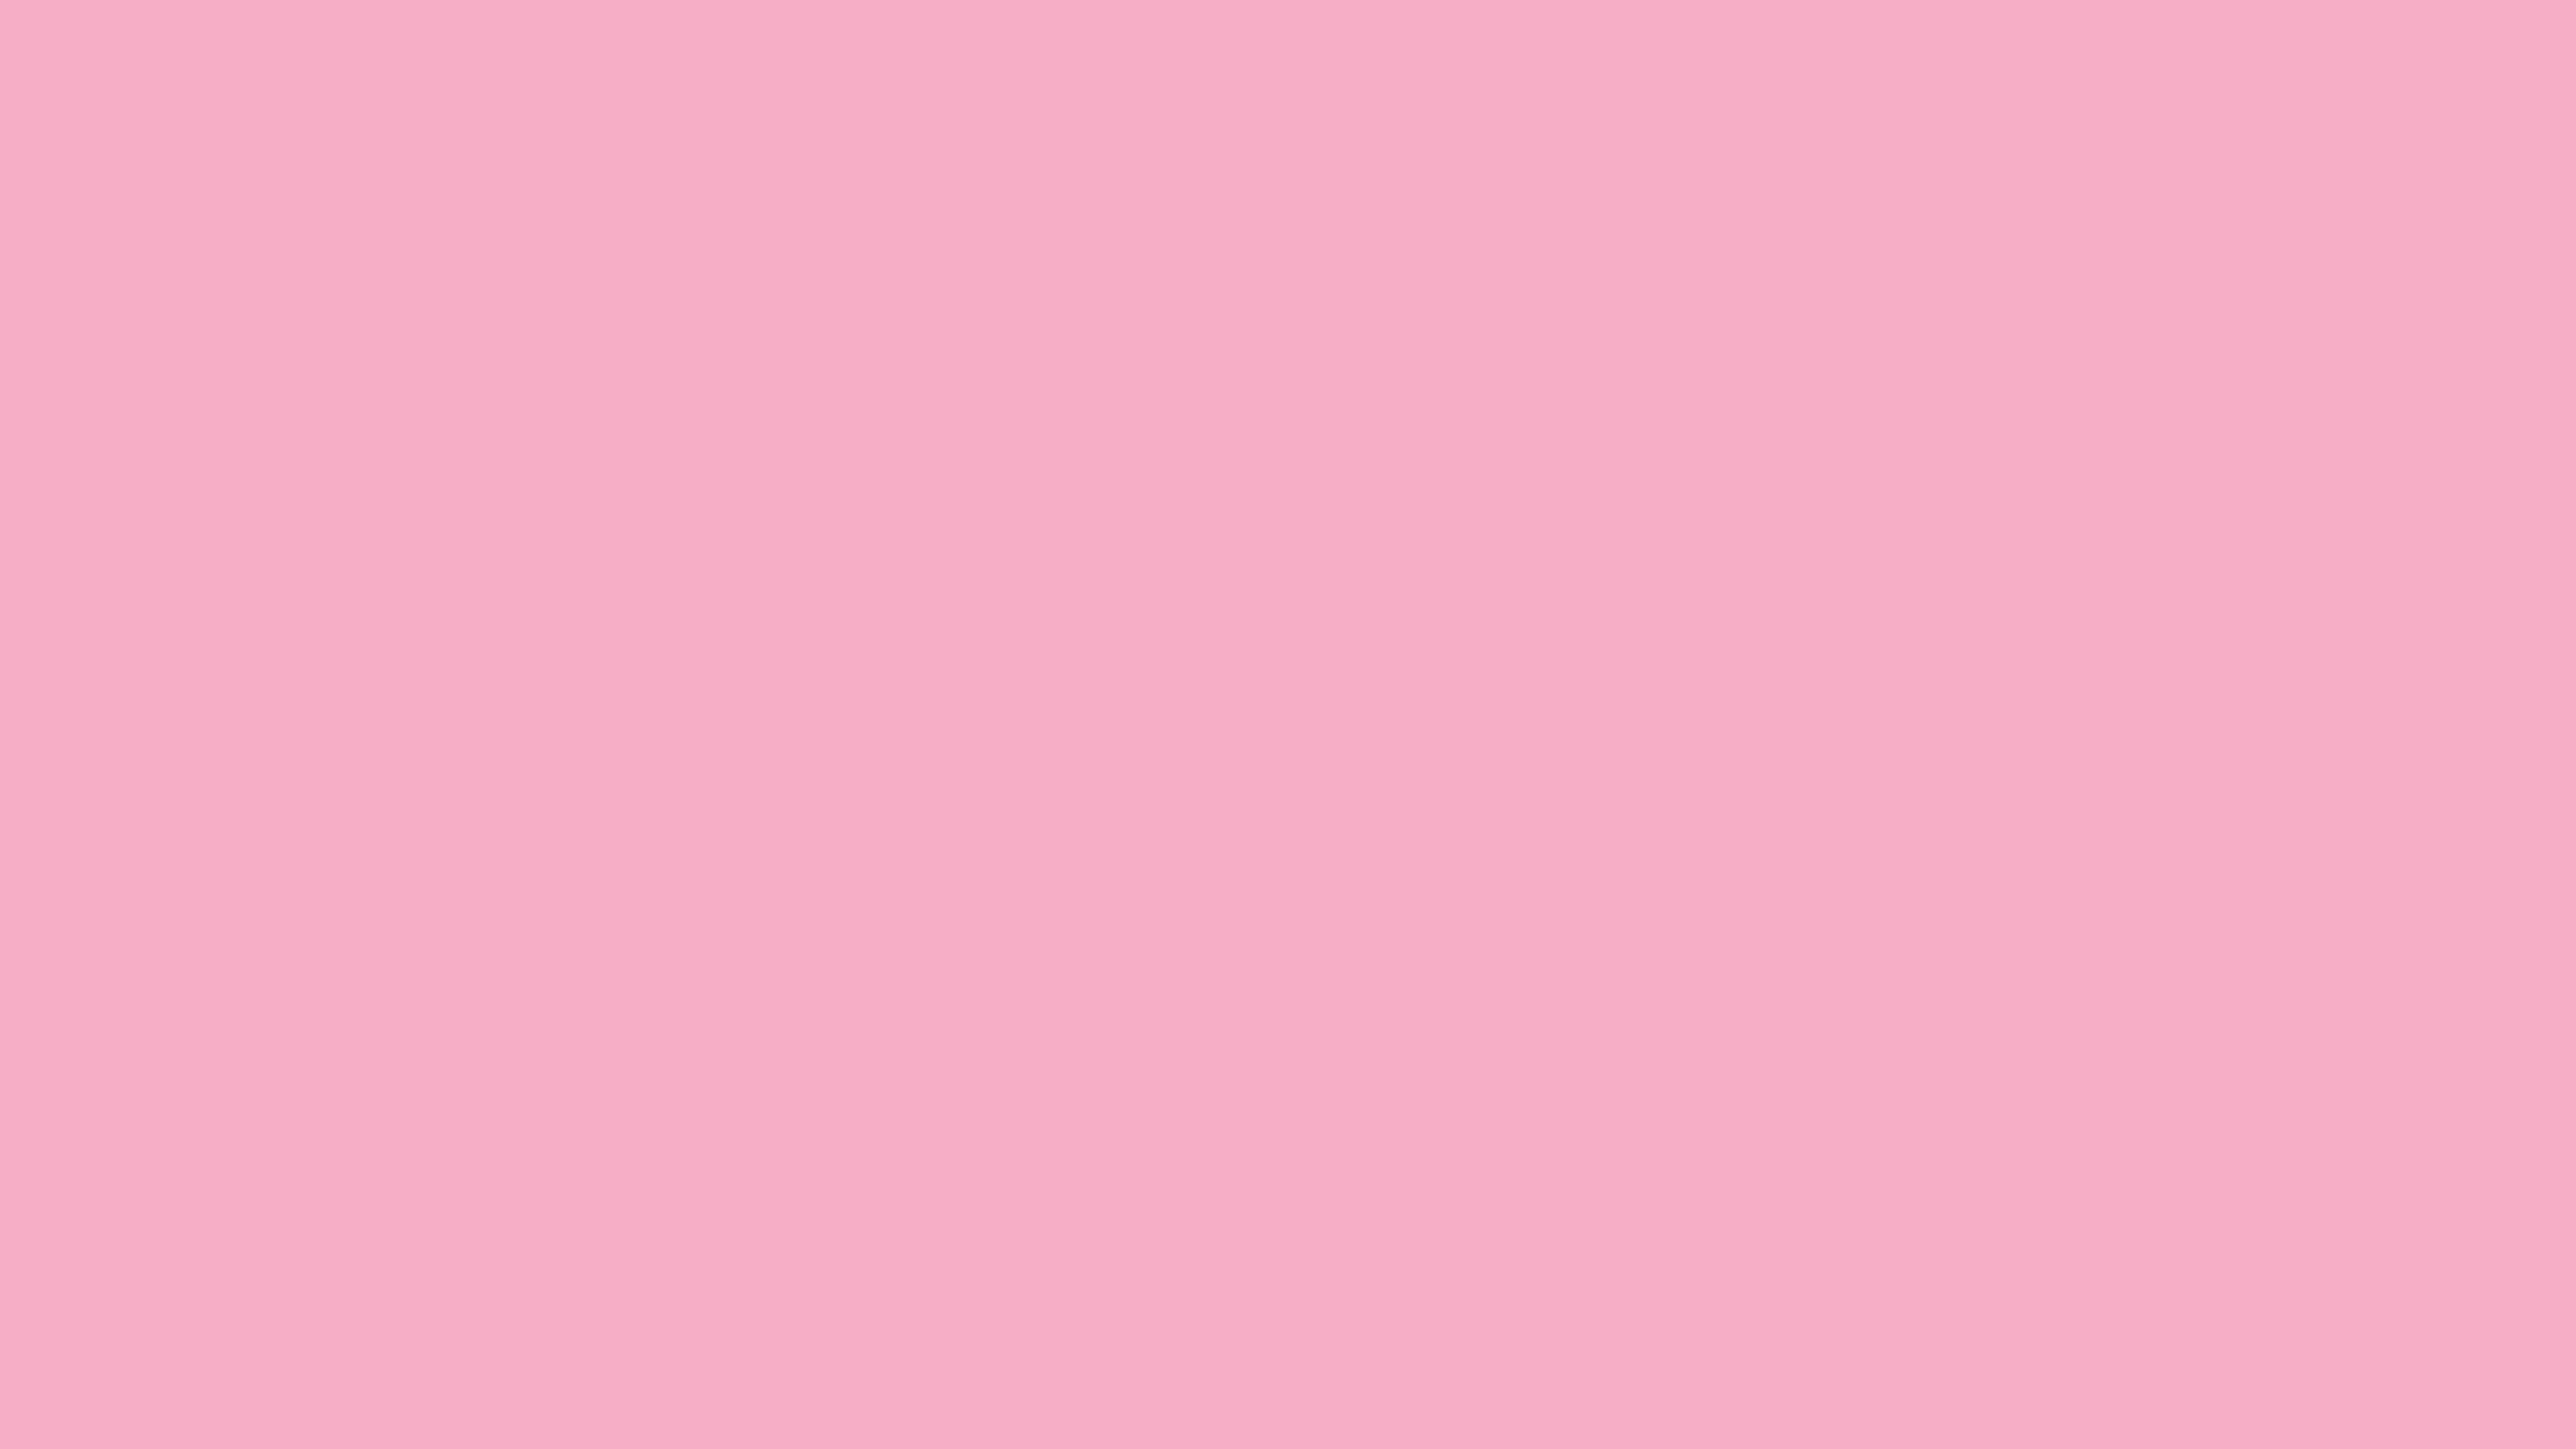 7680x4320 Nadeshiko Pink Solid Color Background